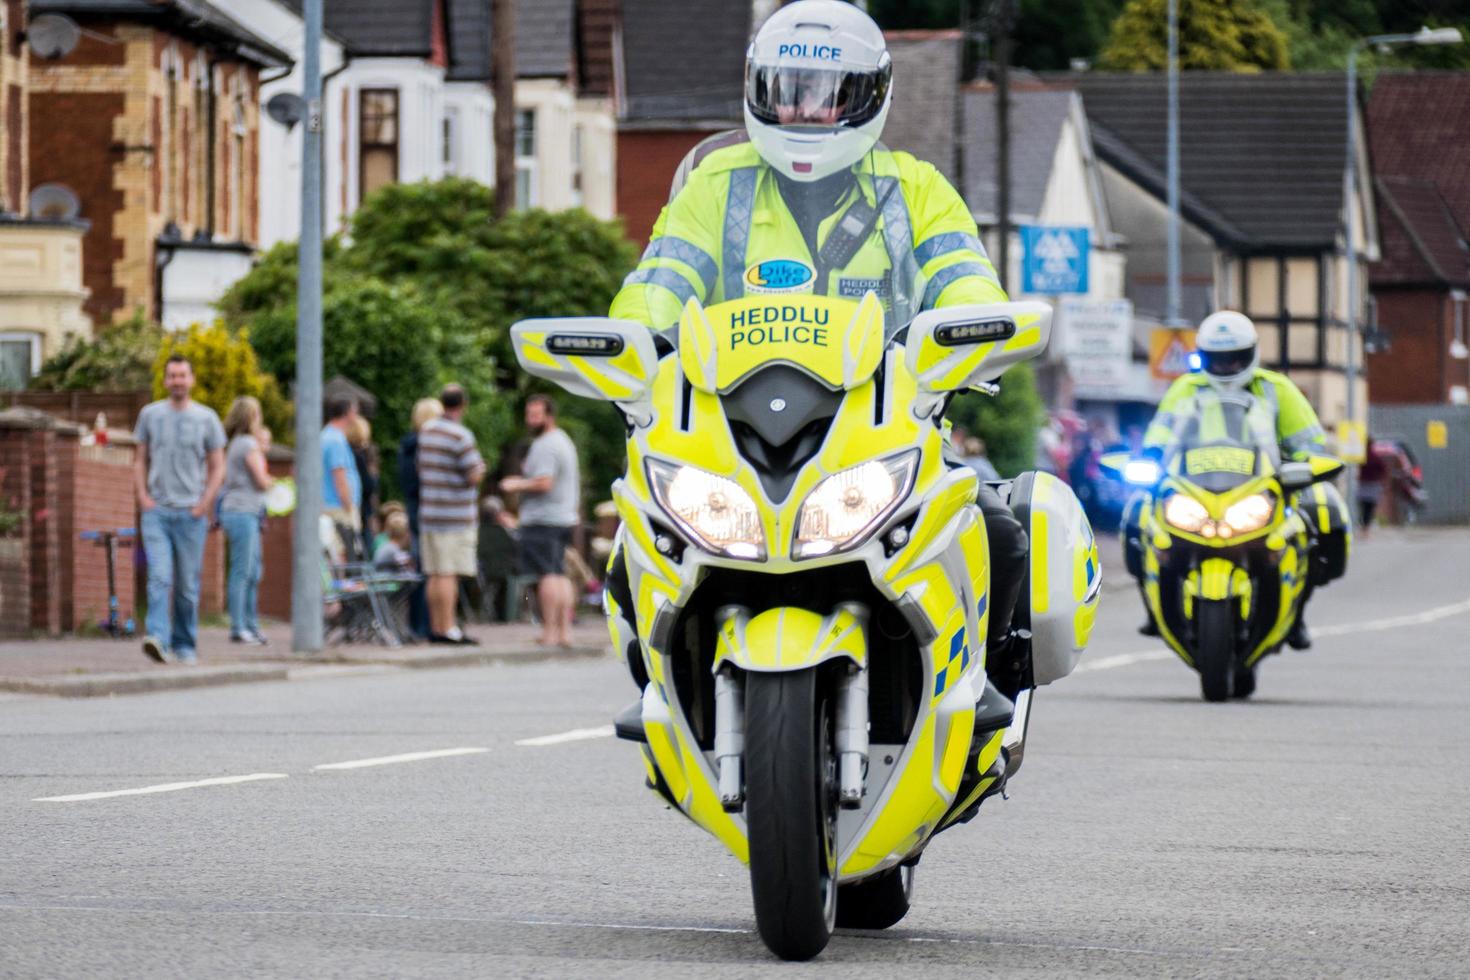 cardiff, wales, Storbritannien, 2015. polismotorcyklister vid velothon-cykelevenemanget foto